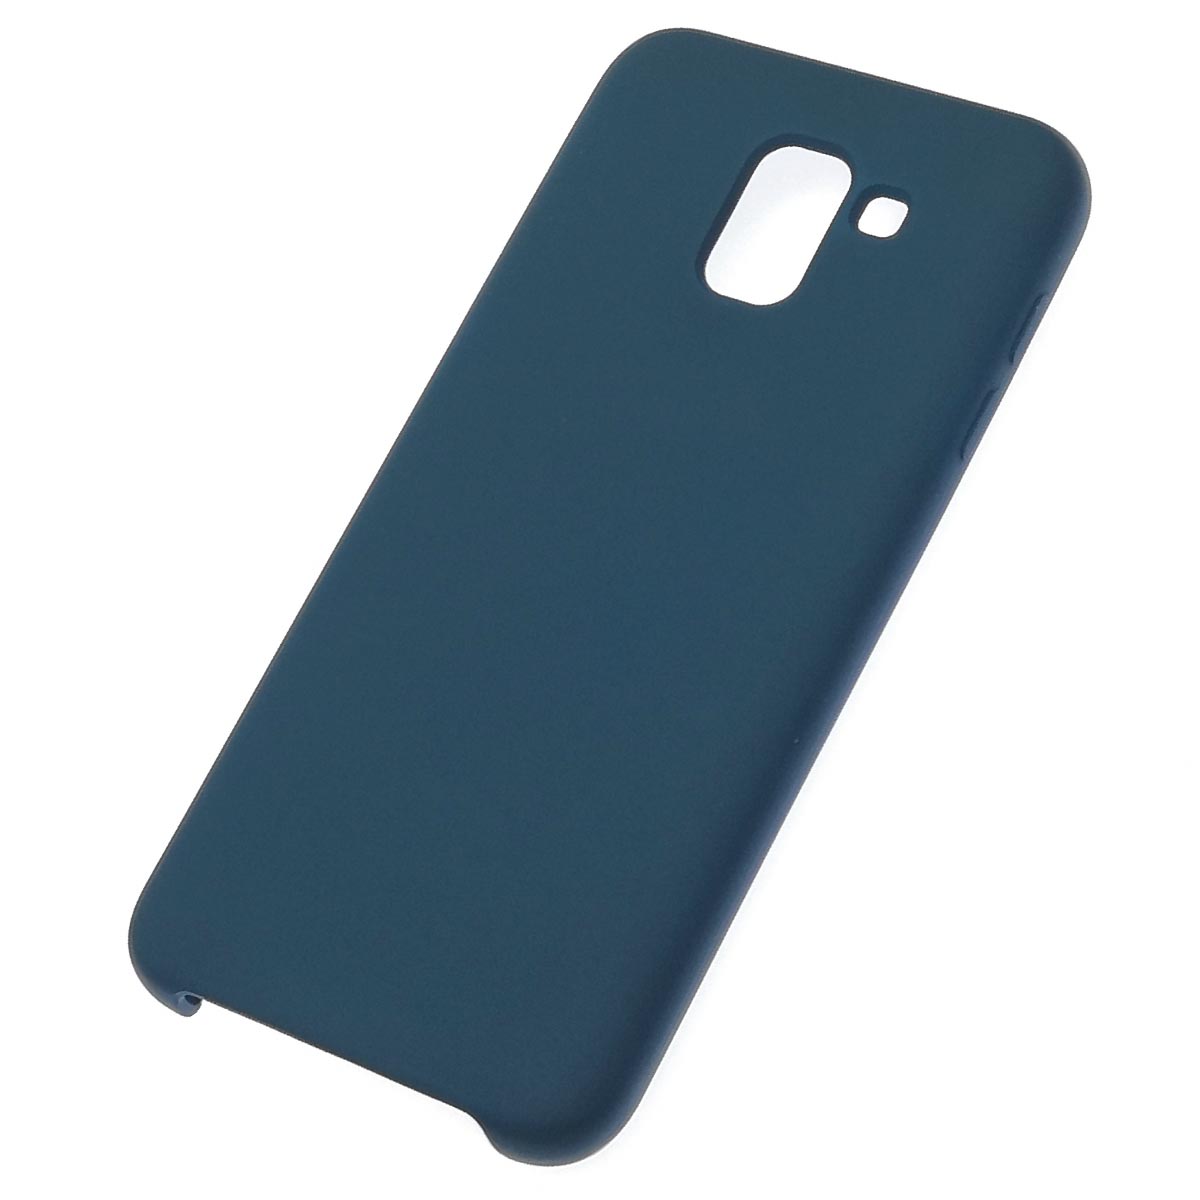 Чехол накладка Silicon Cover для SAMSUNG Galaxy J6 2018 (SM-J600), силикон, бархат, цвет синий